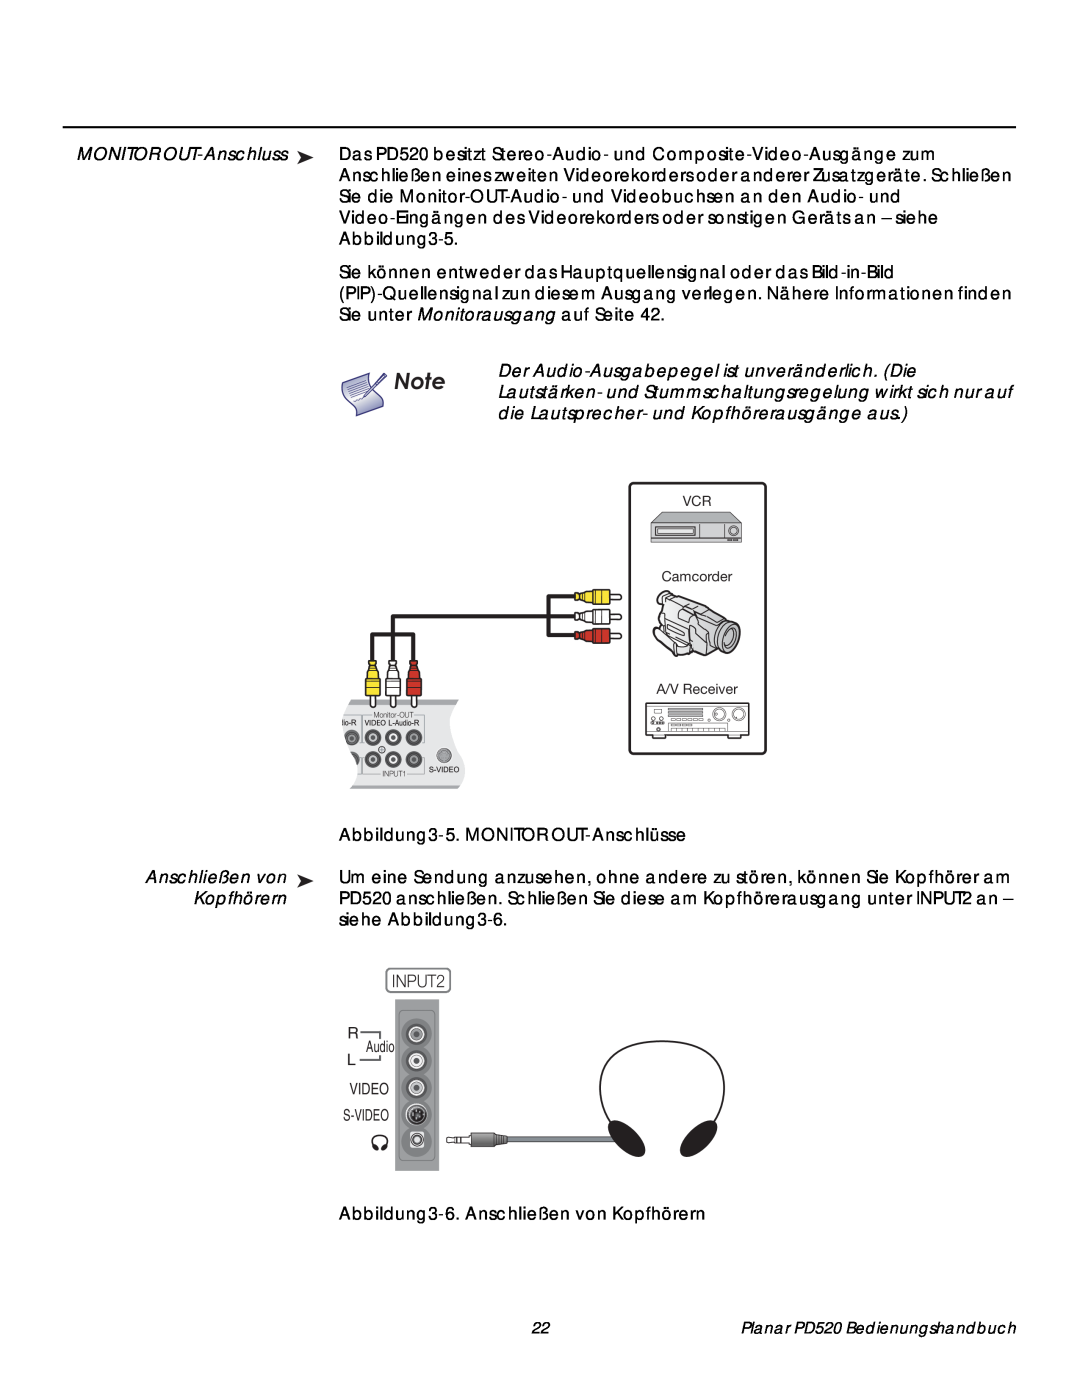 Planar PD520 manual MONITOR OUT-Anschluss, Abbildung3-5.MONITOR OUT-Anschlüsse, Anschließen von, Kopfhörern, INPUT2 